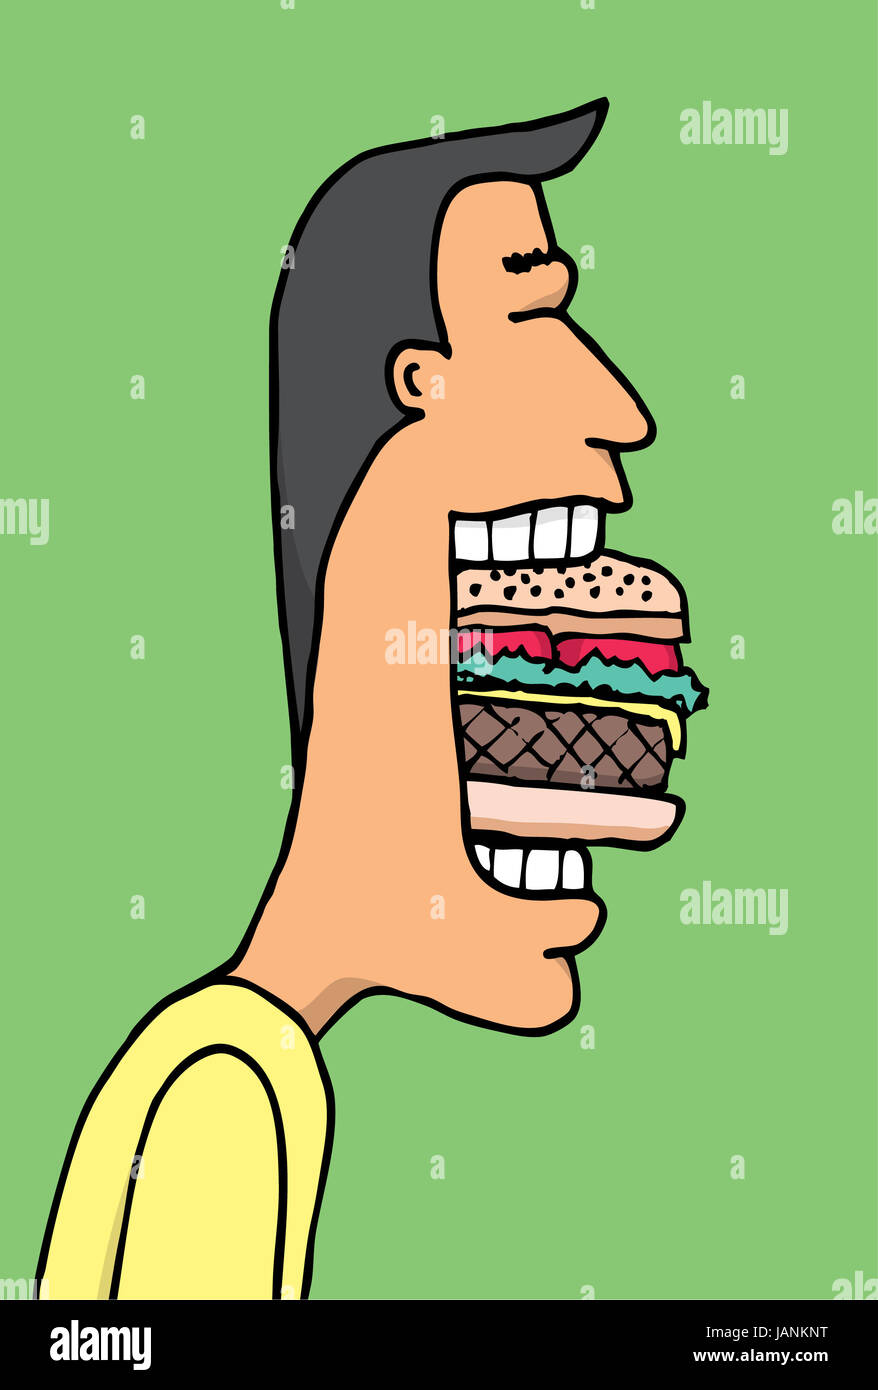 Cartoon Man Eating Huge Hamburguer Stock Photo Alamy